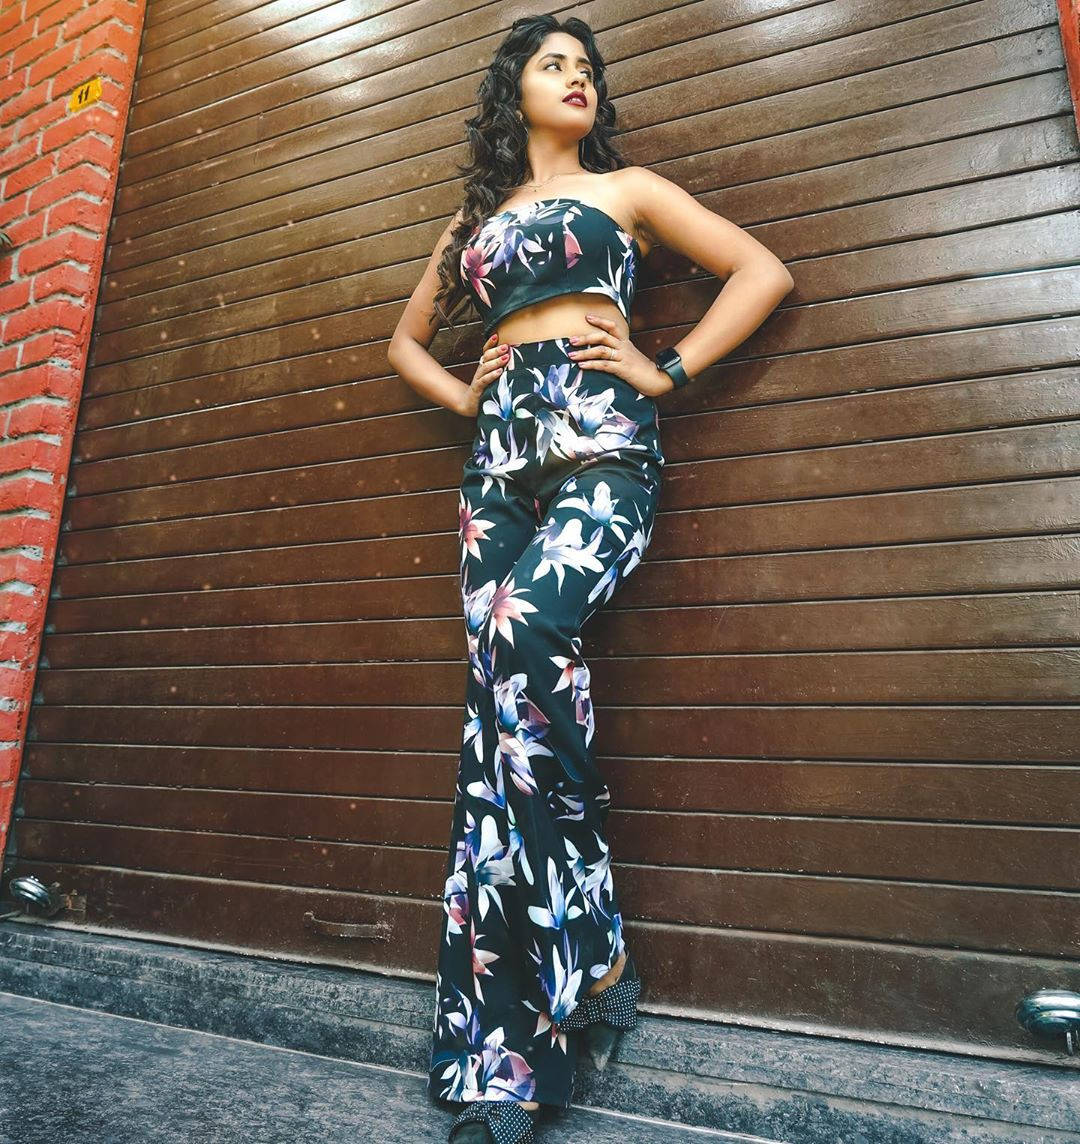 Nisha Guragain Black Floral-style Clothes Background